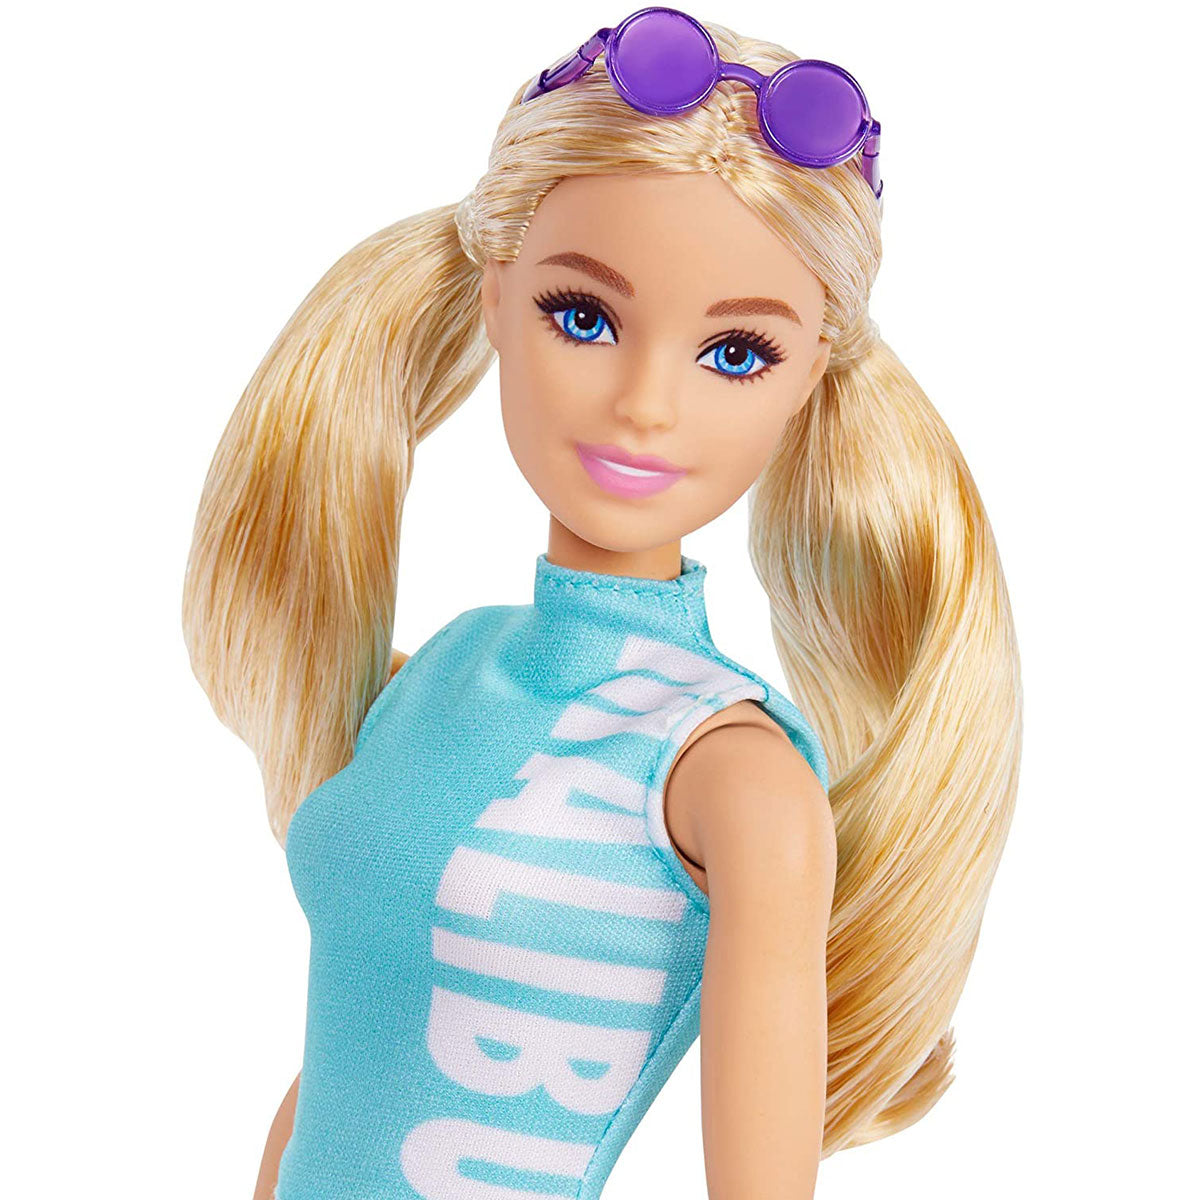 Barbie - Malibu Fashion Top Doll